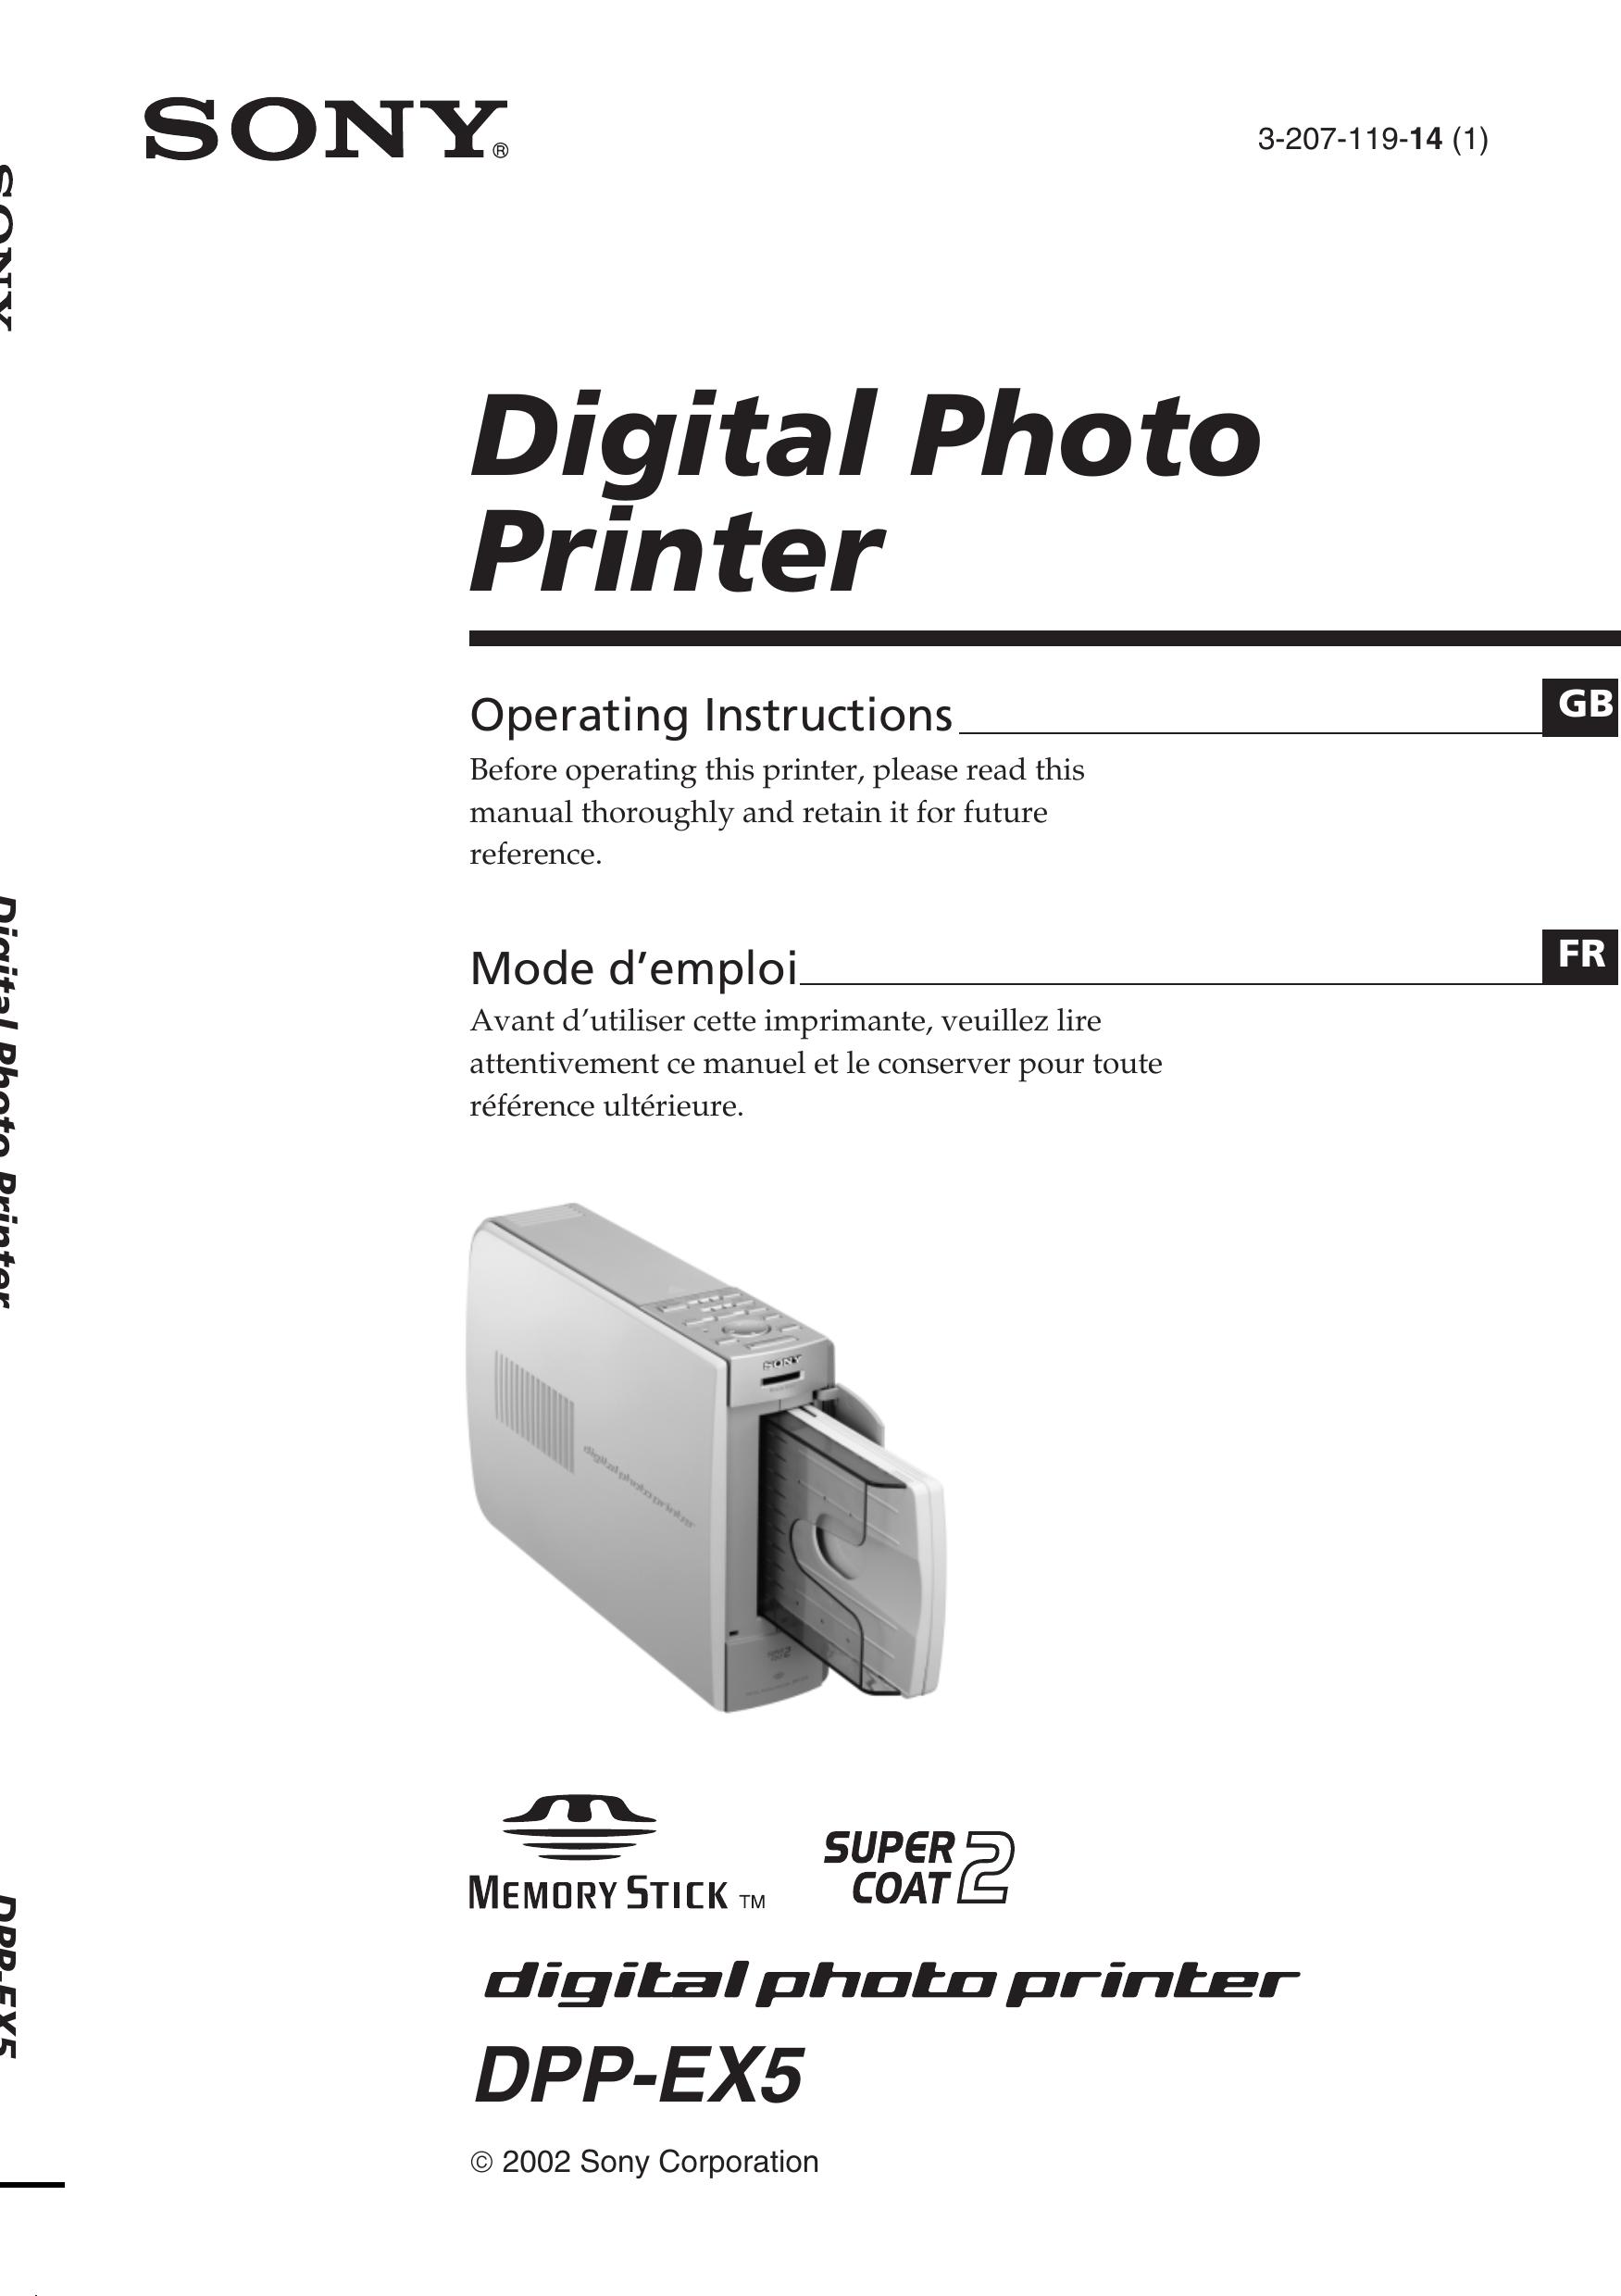 Sony DPP-EX5 Photo Printer User Manual